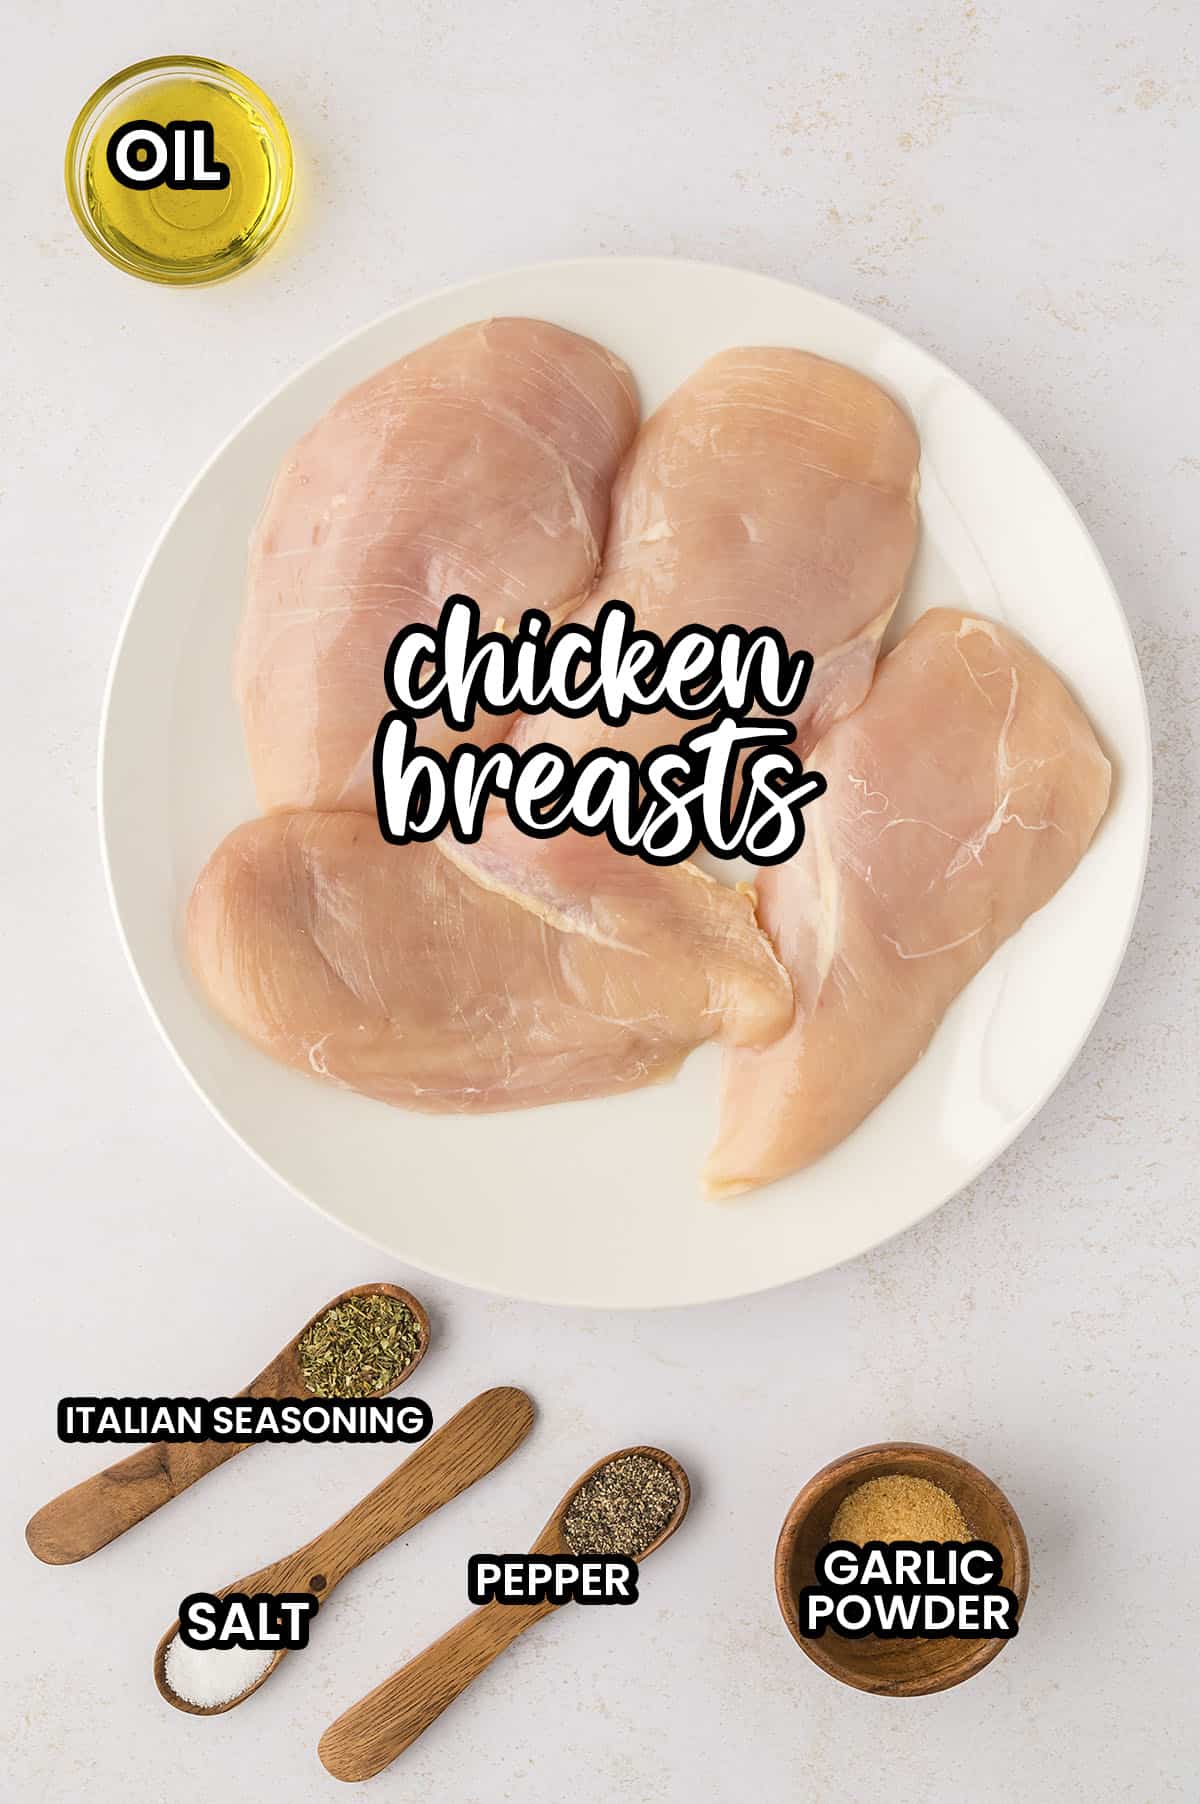 Ingredients for seasoned chicken breasts.